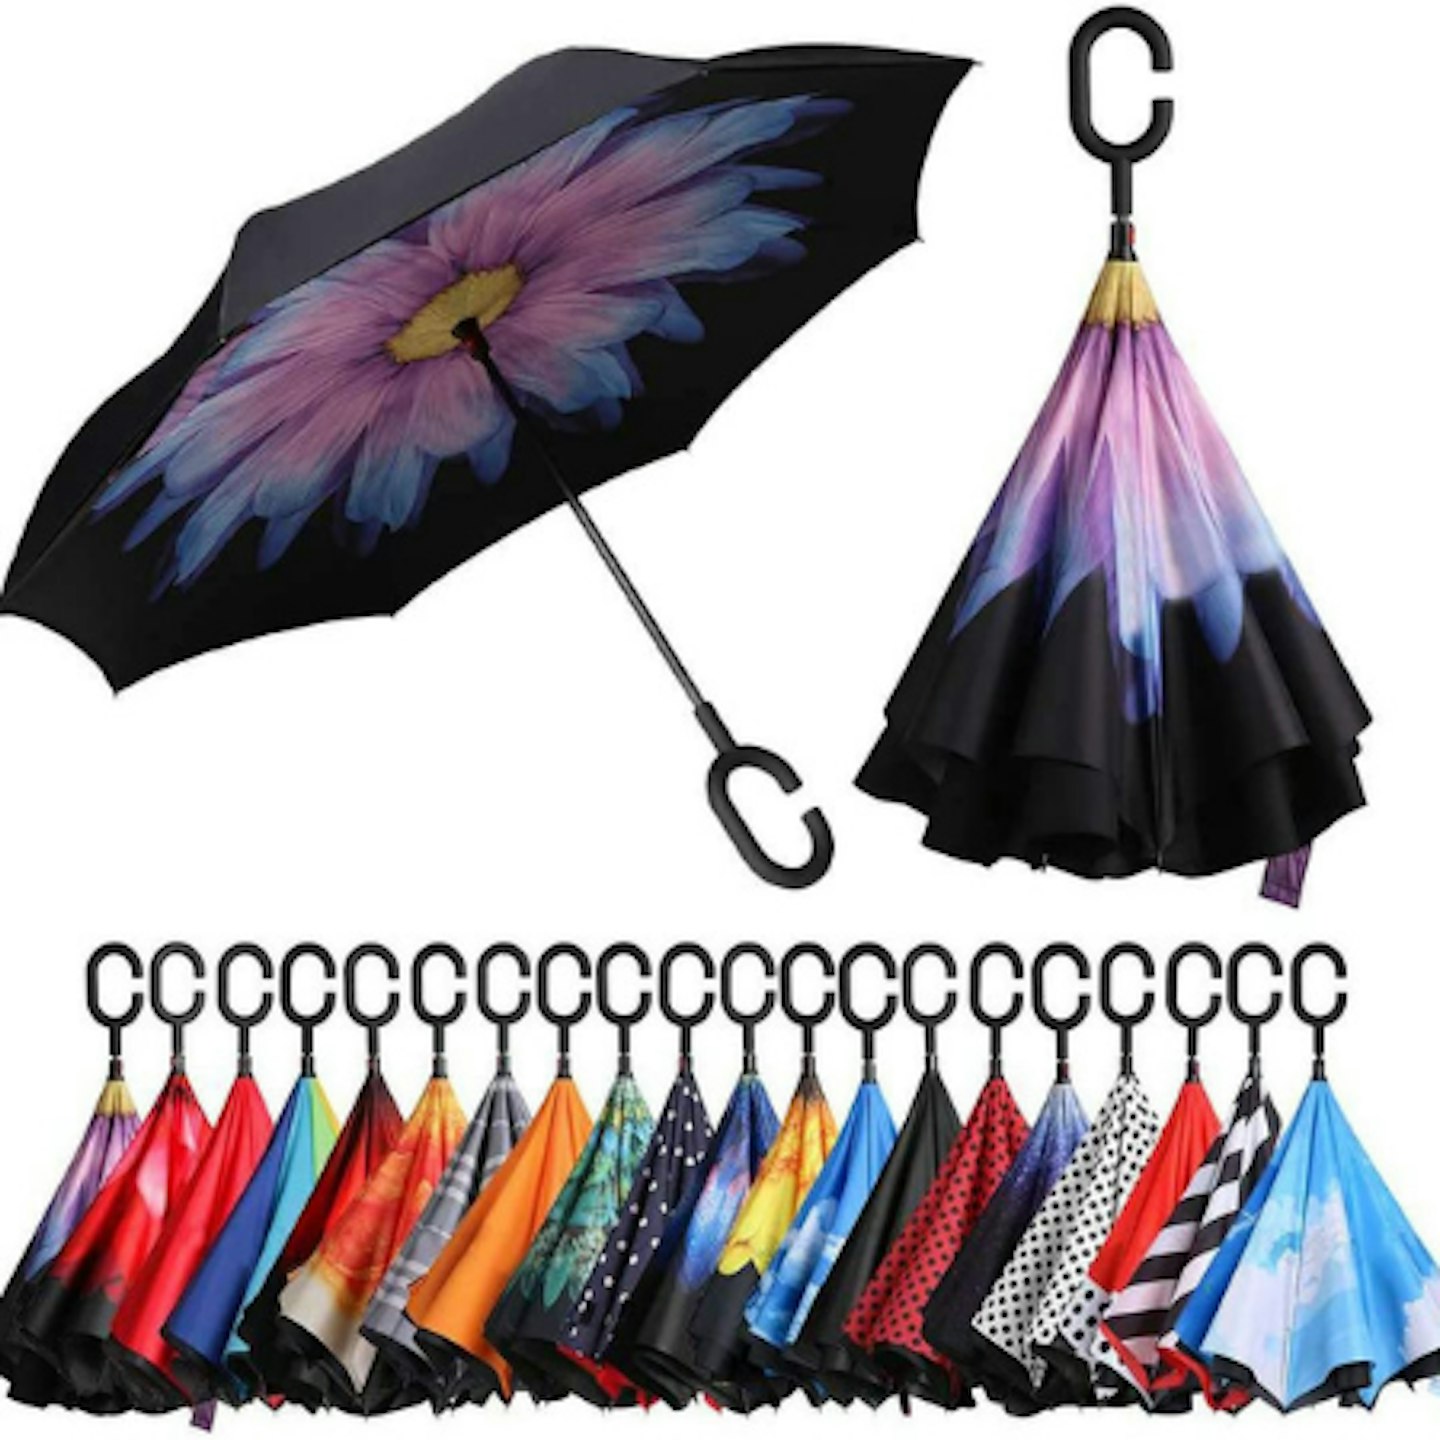 Eono Double Layer Inverted Umbrellas